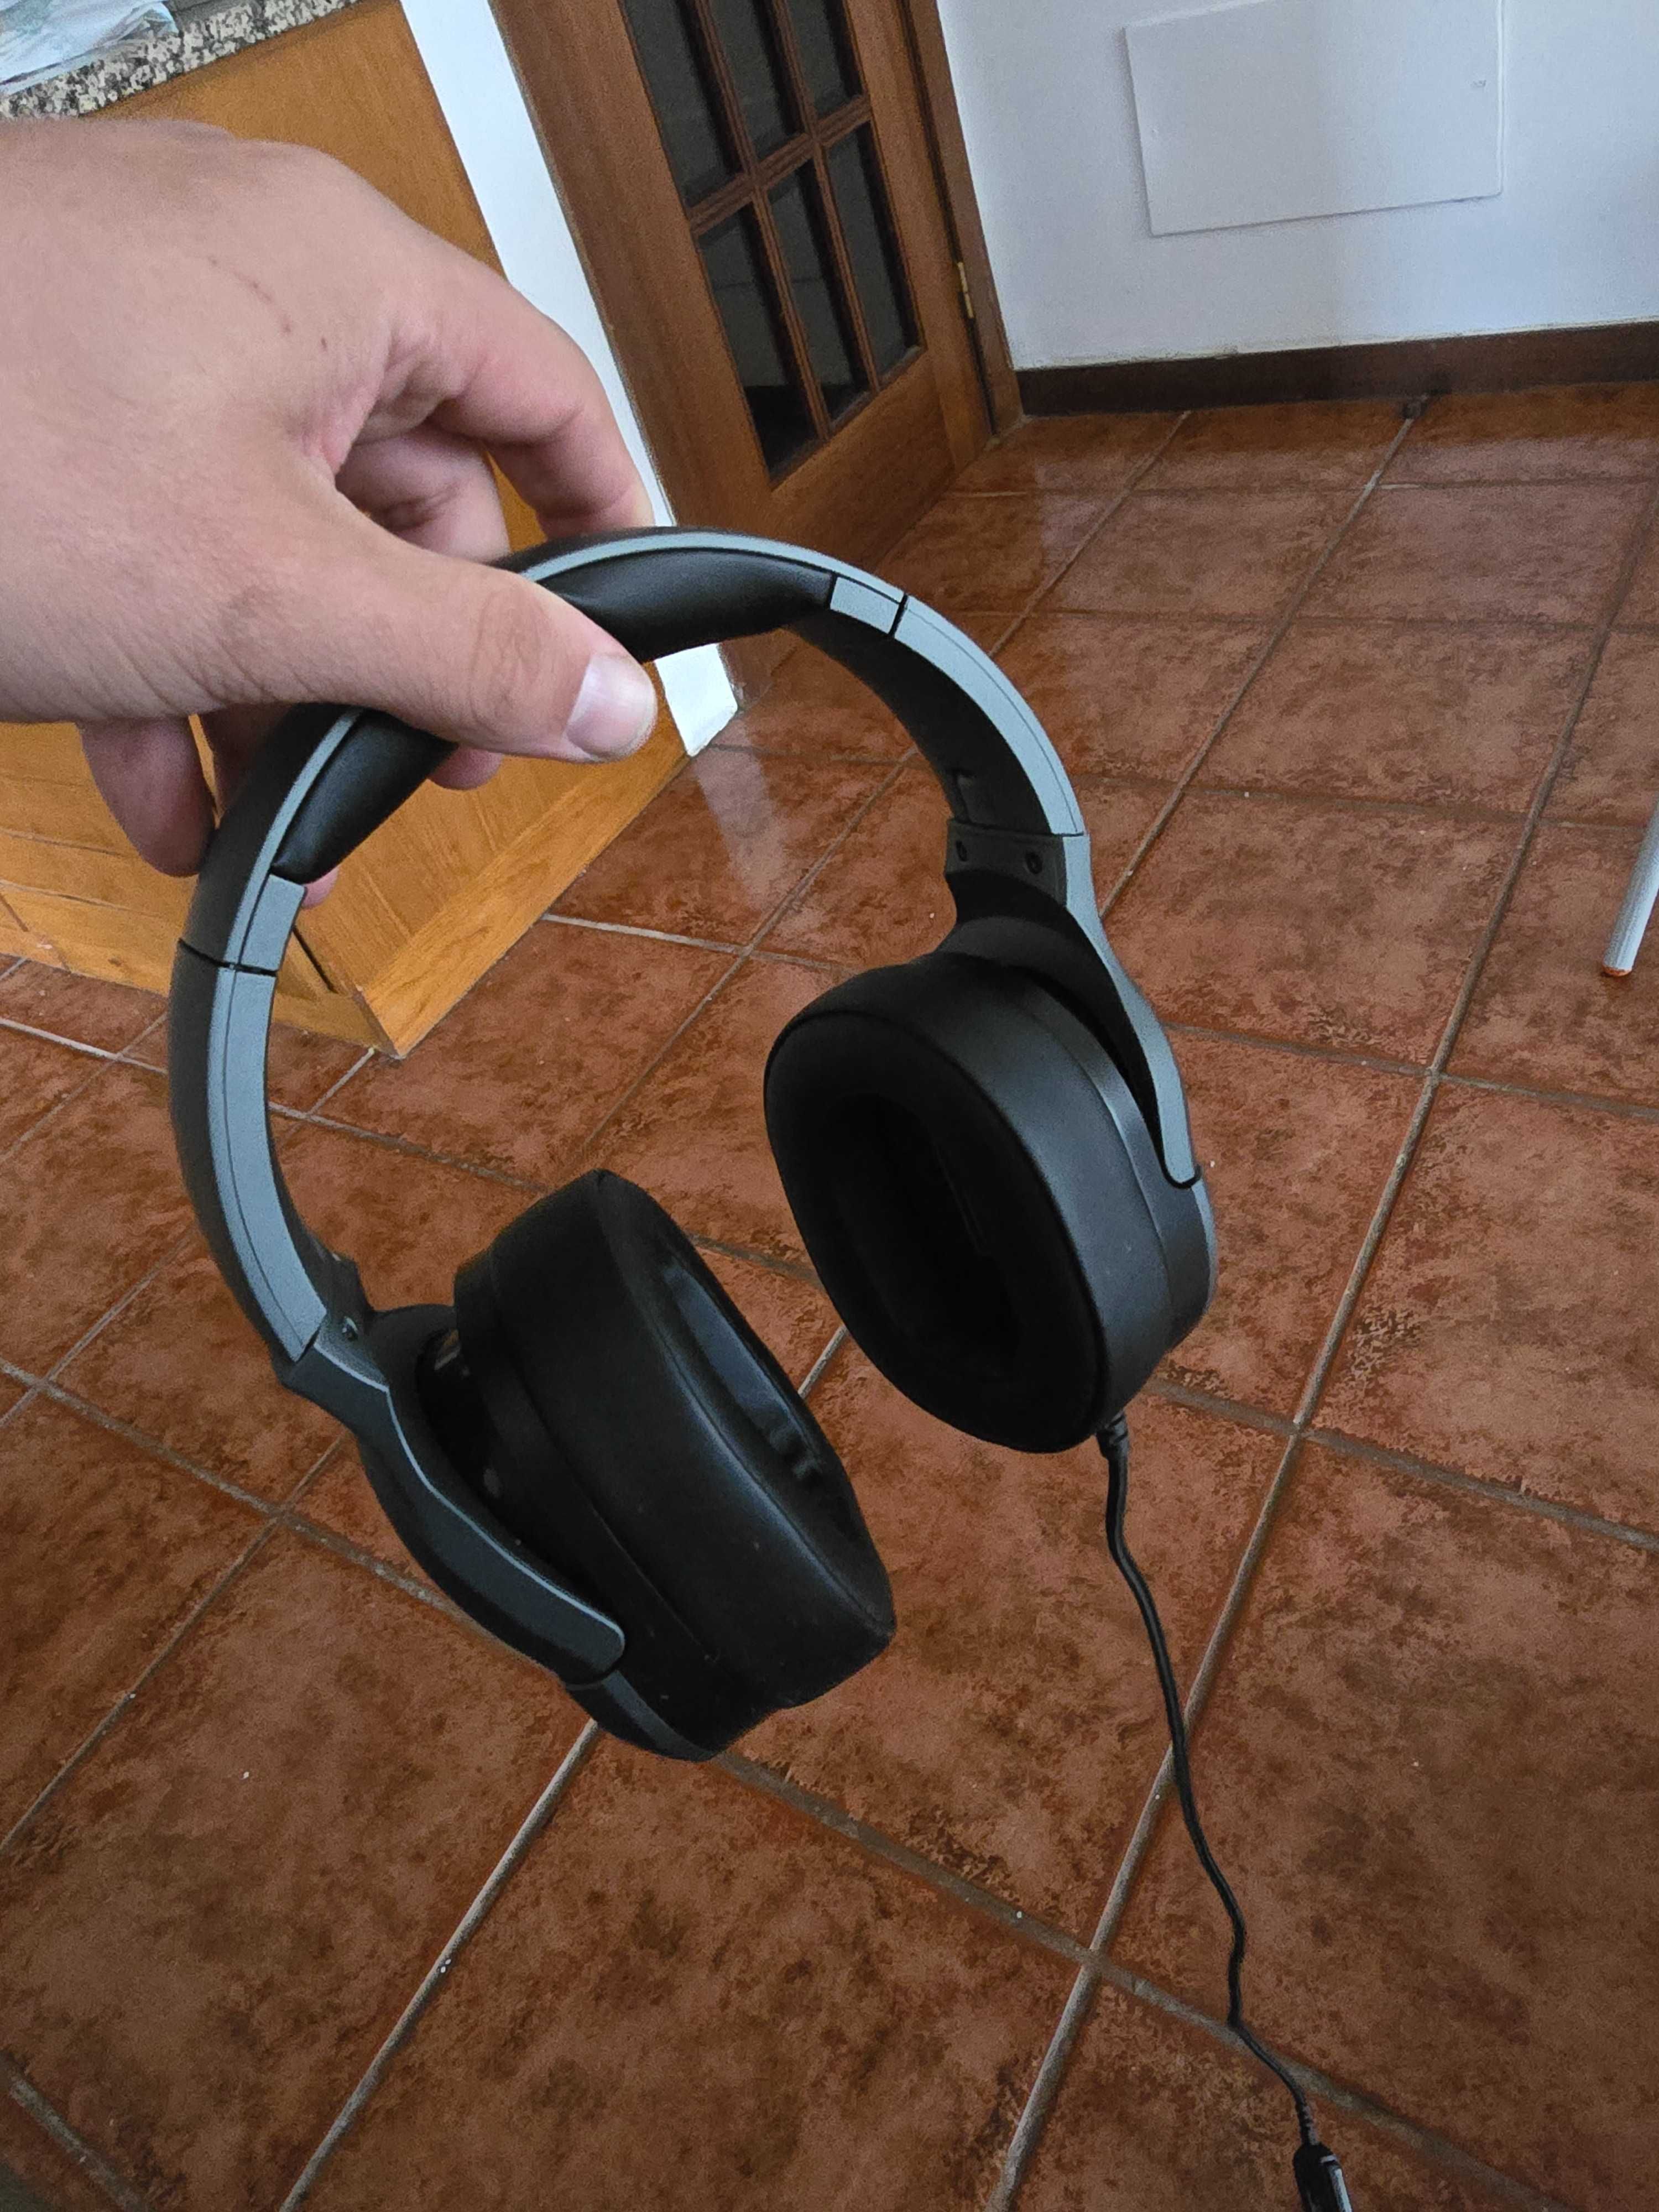 Headsets MSI GH50 (Novos)